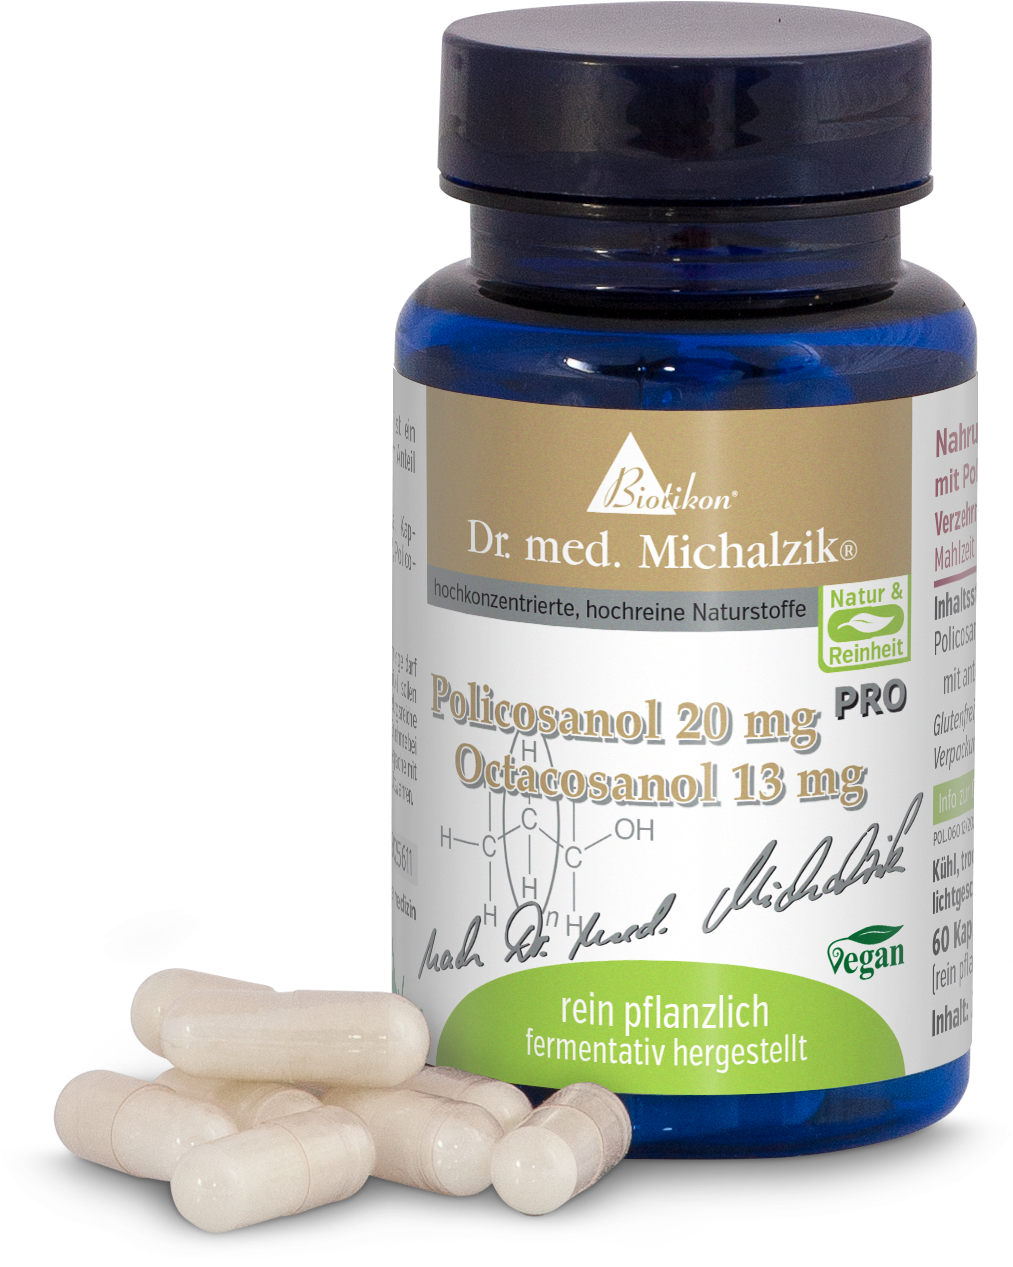 Policosanolo 20 mg pro - Octacosanolo 13 mg di Dr. Michalzik